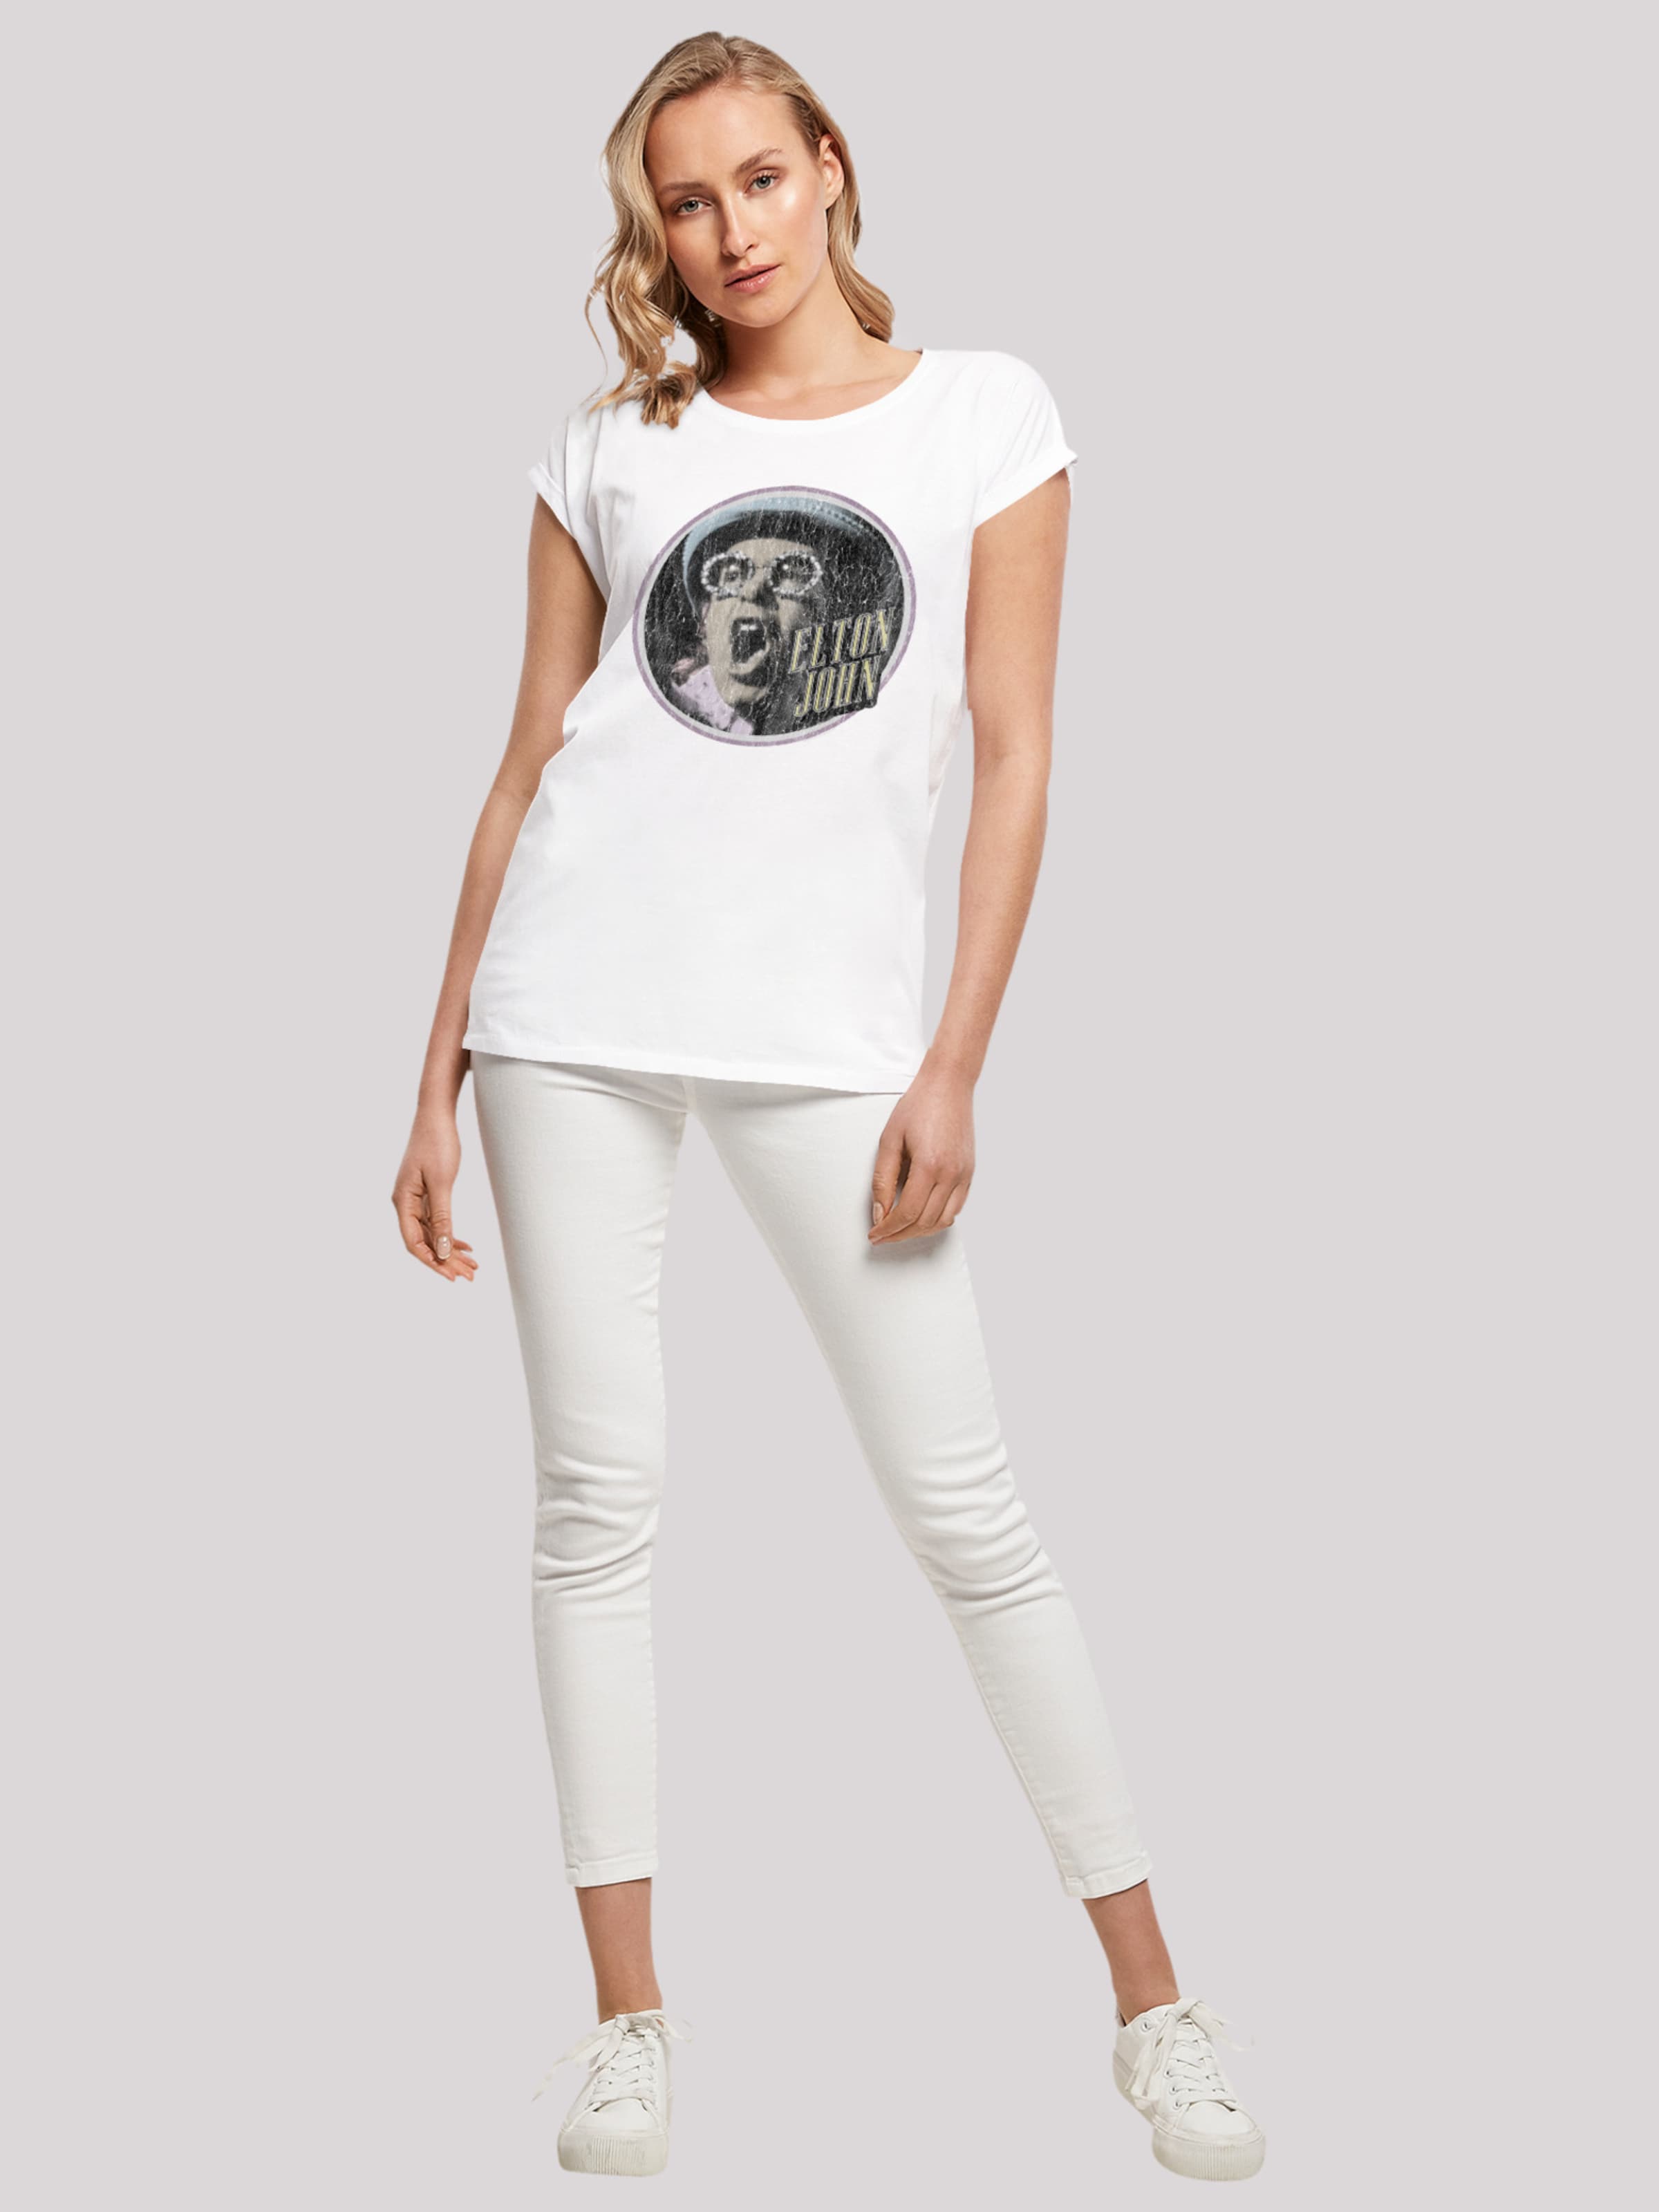 \'Elton Shirt YOU John F4NT4STIC in White | Vintage ABOUT Circle\'